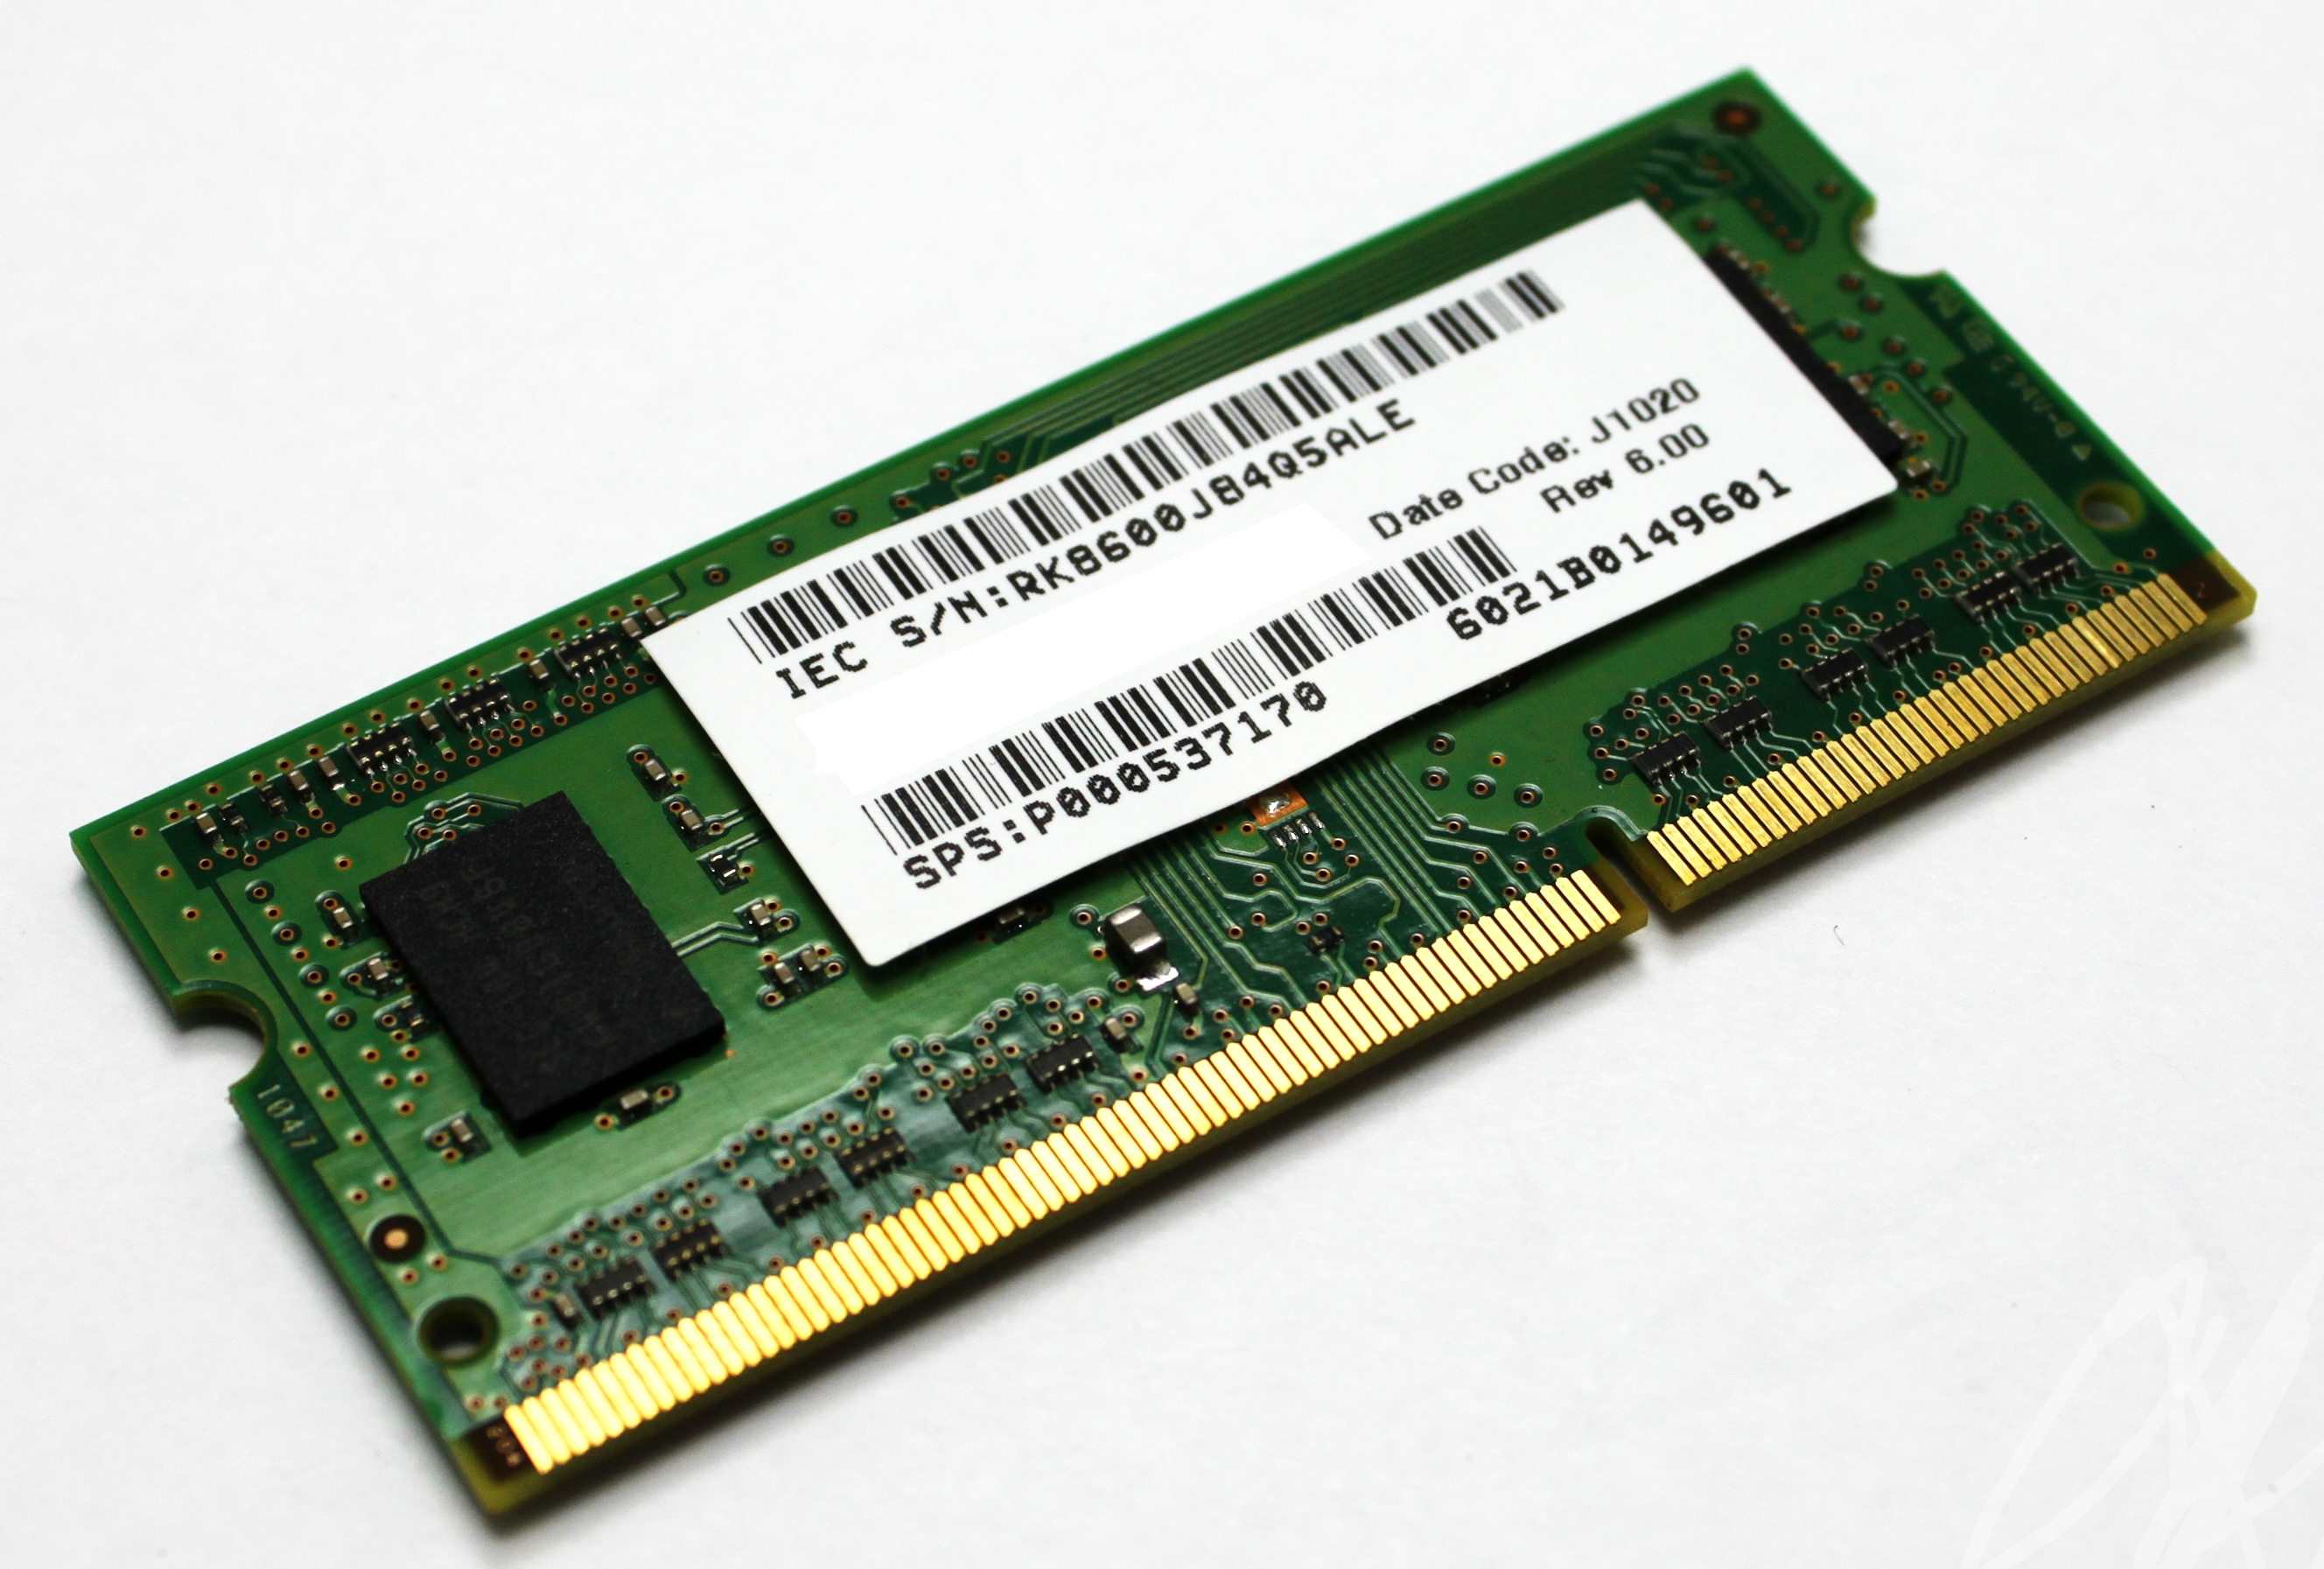 DDR2-5300 - Non-ECC OFFTEK 1GB Replacement RAM Memory for Packard Bell iXtreme 8171 Desktop Memory